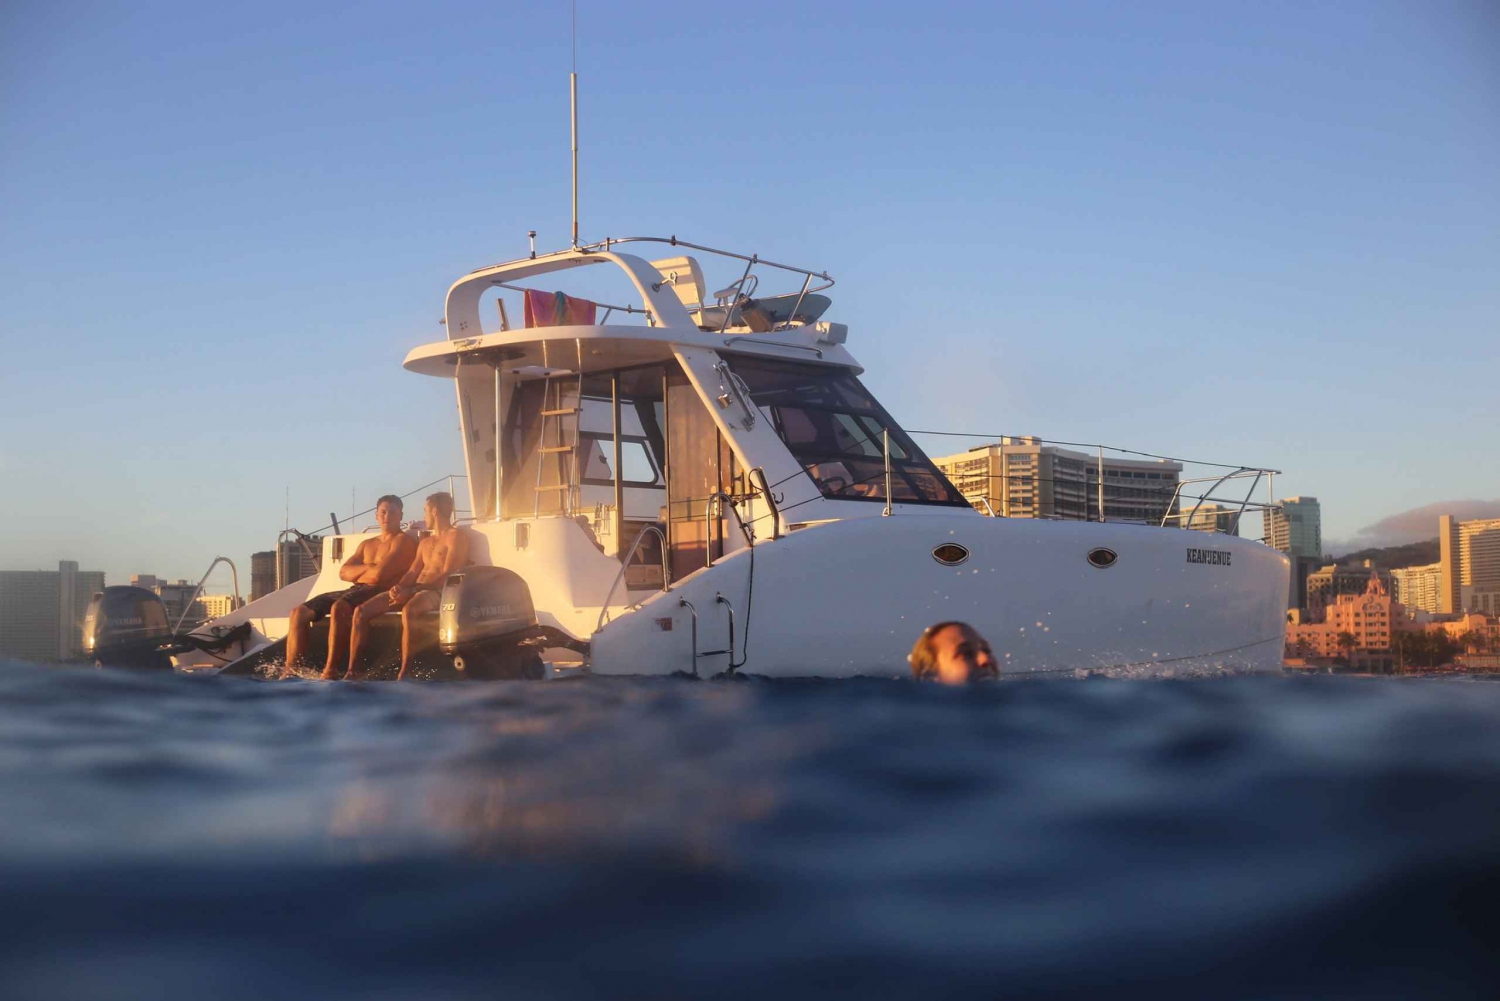 Oahu: Honolulu Private Catamaran Cruise with Snorkeling